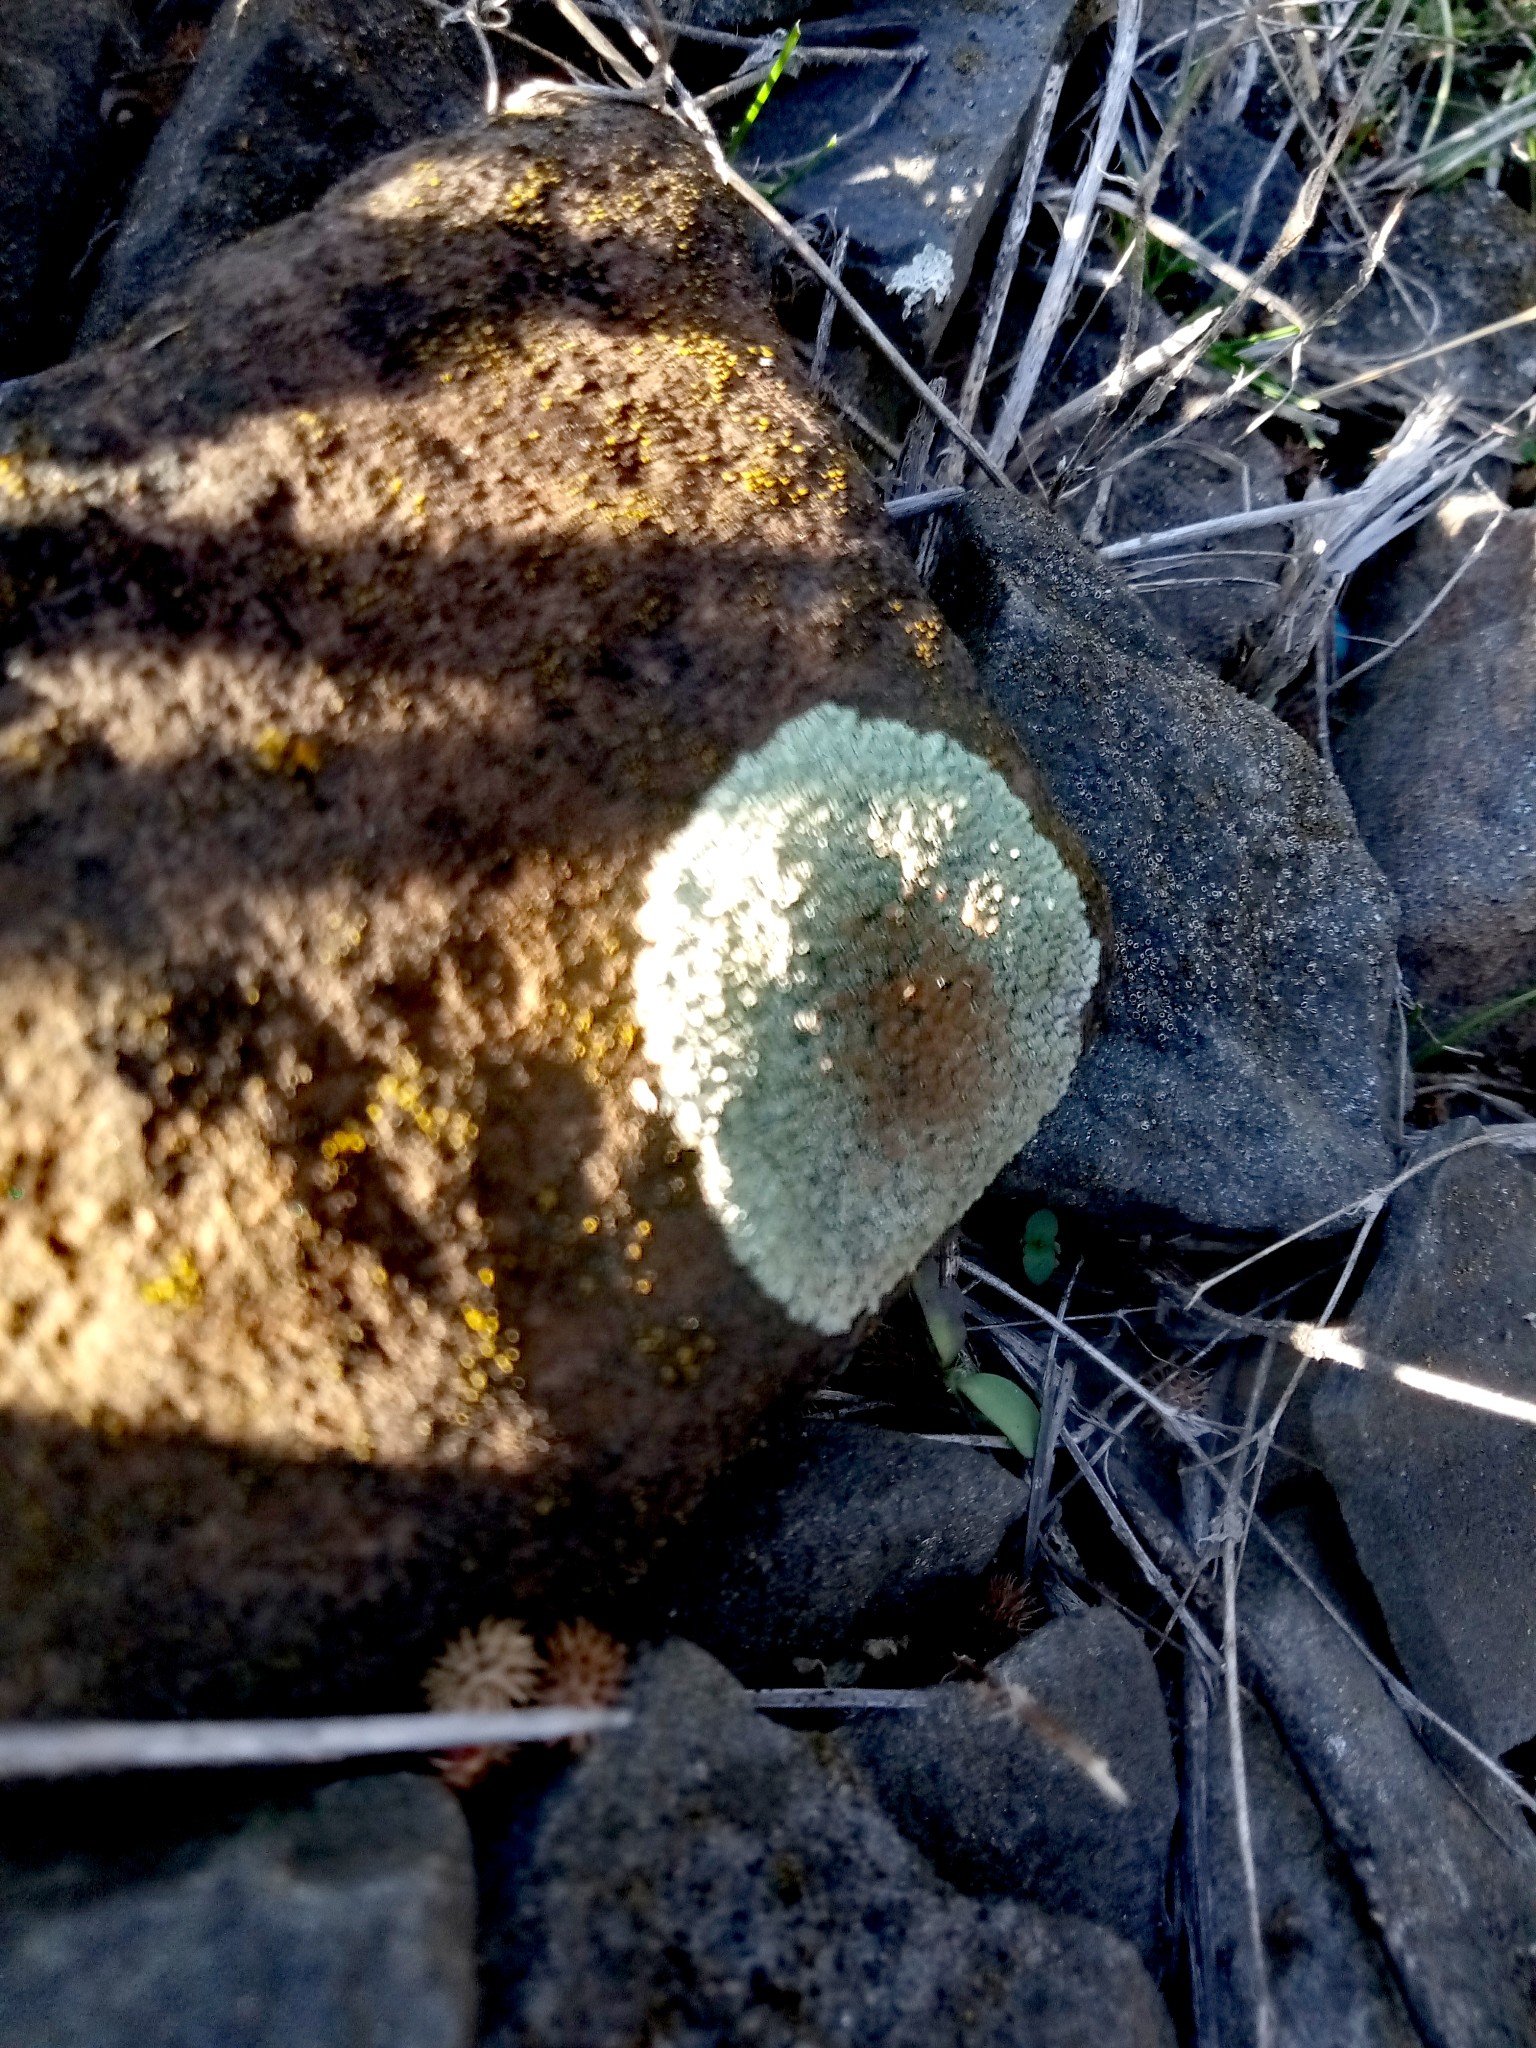 lichens on stones photo 1